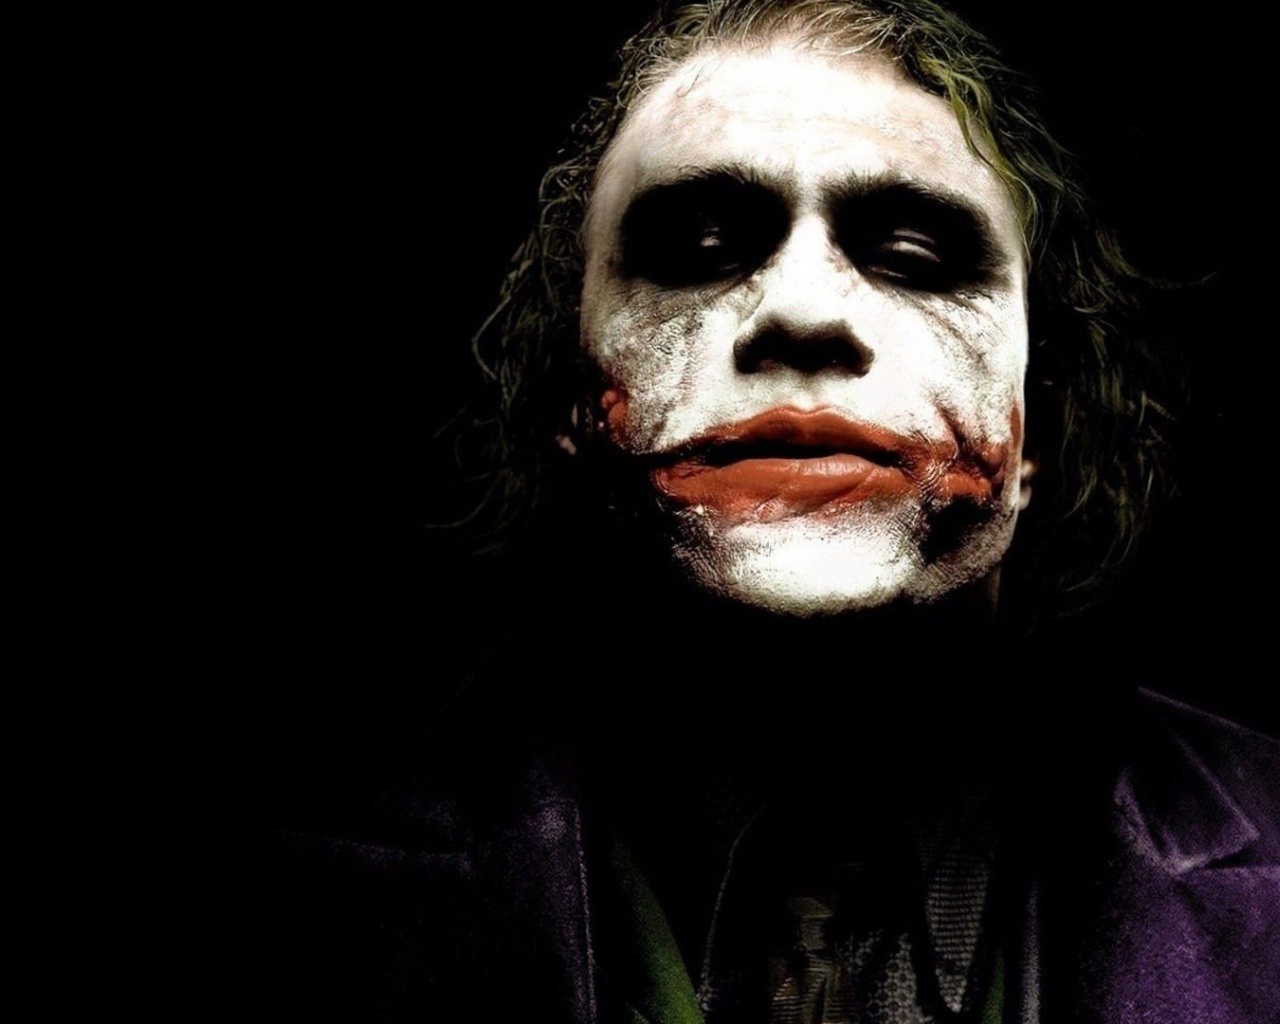 Joker Heath Ledger - The Dark Knight